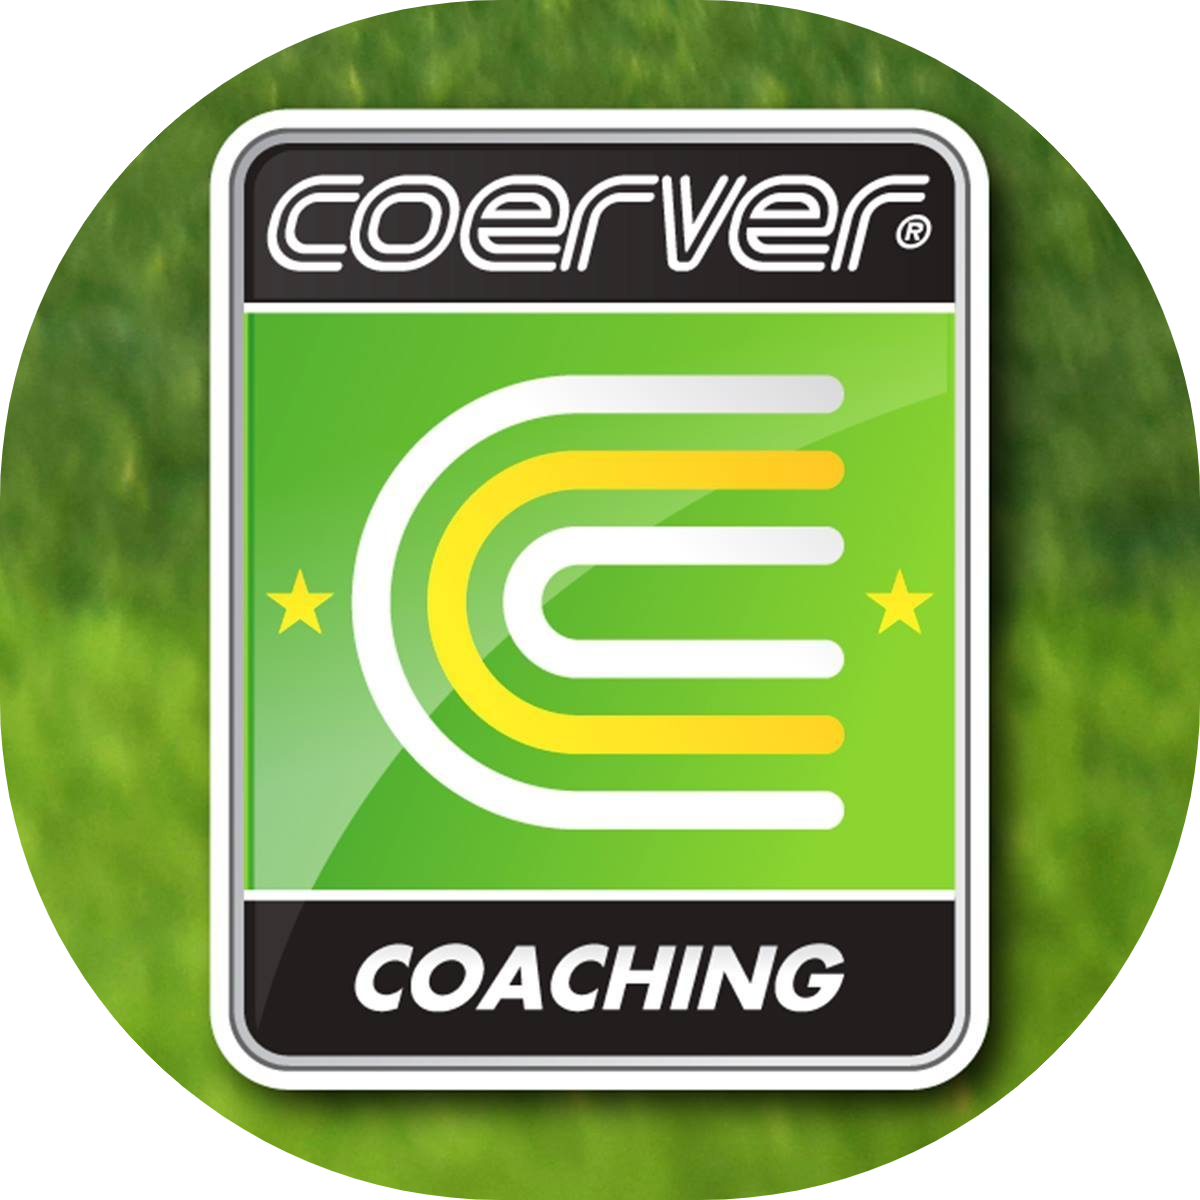 Coerver Coaching Cyprus